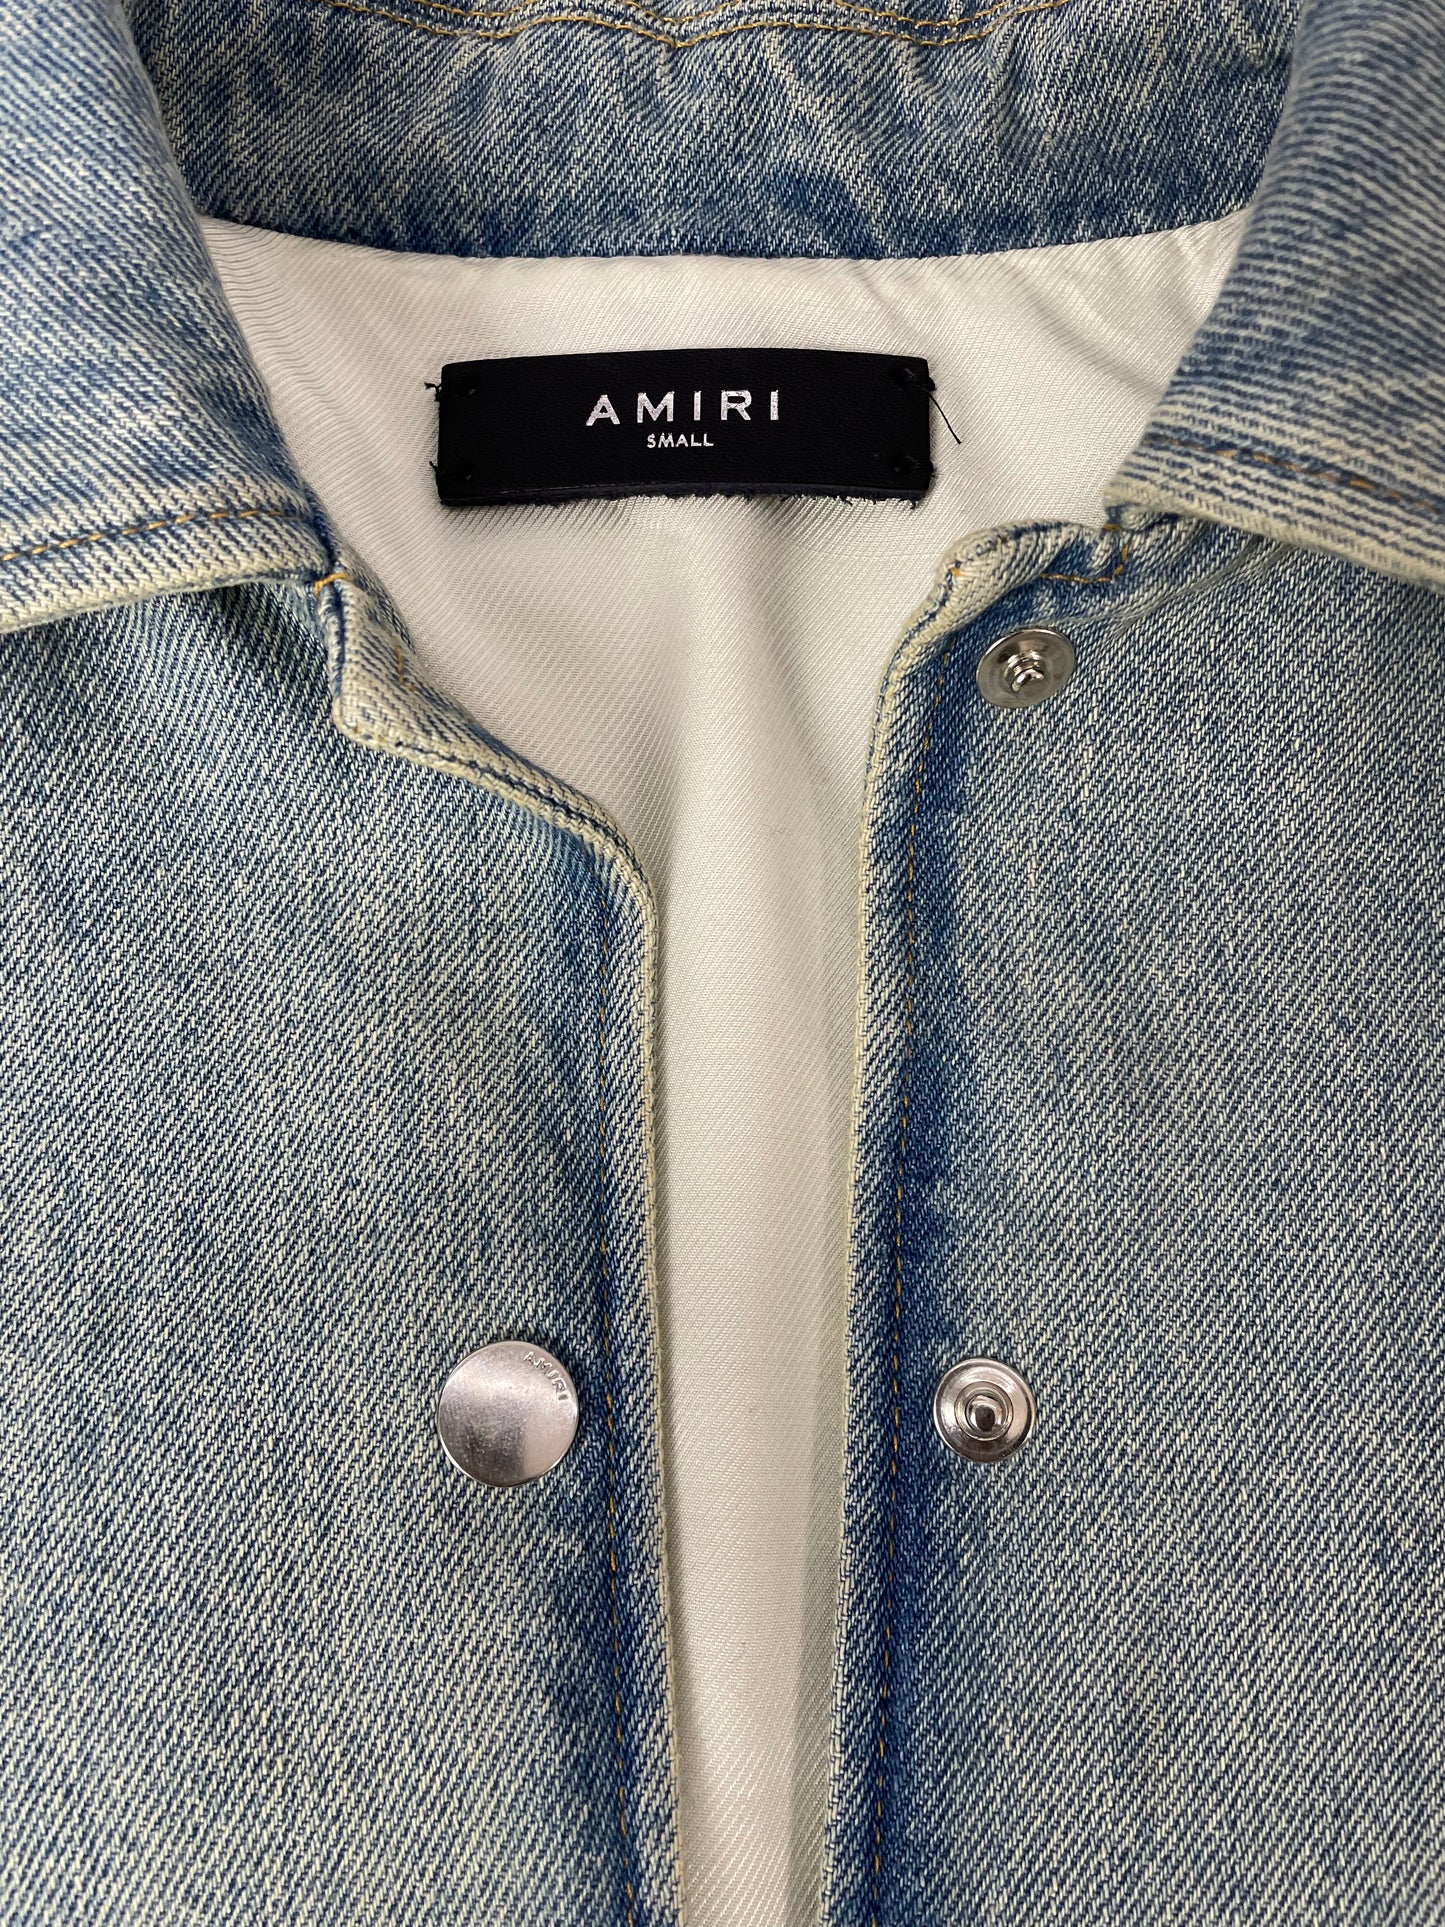 Amiri Womens Bone Jacket UK 8